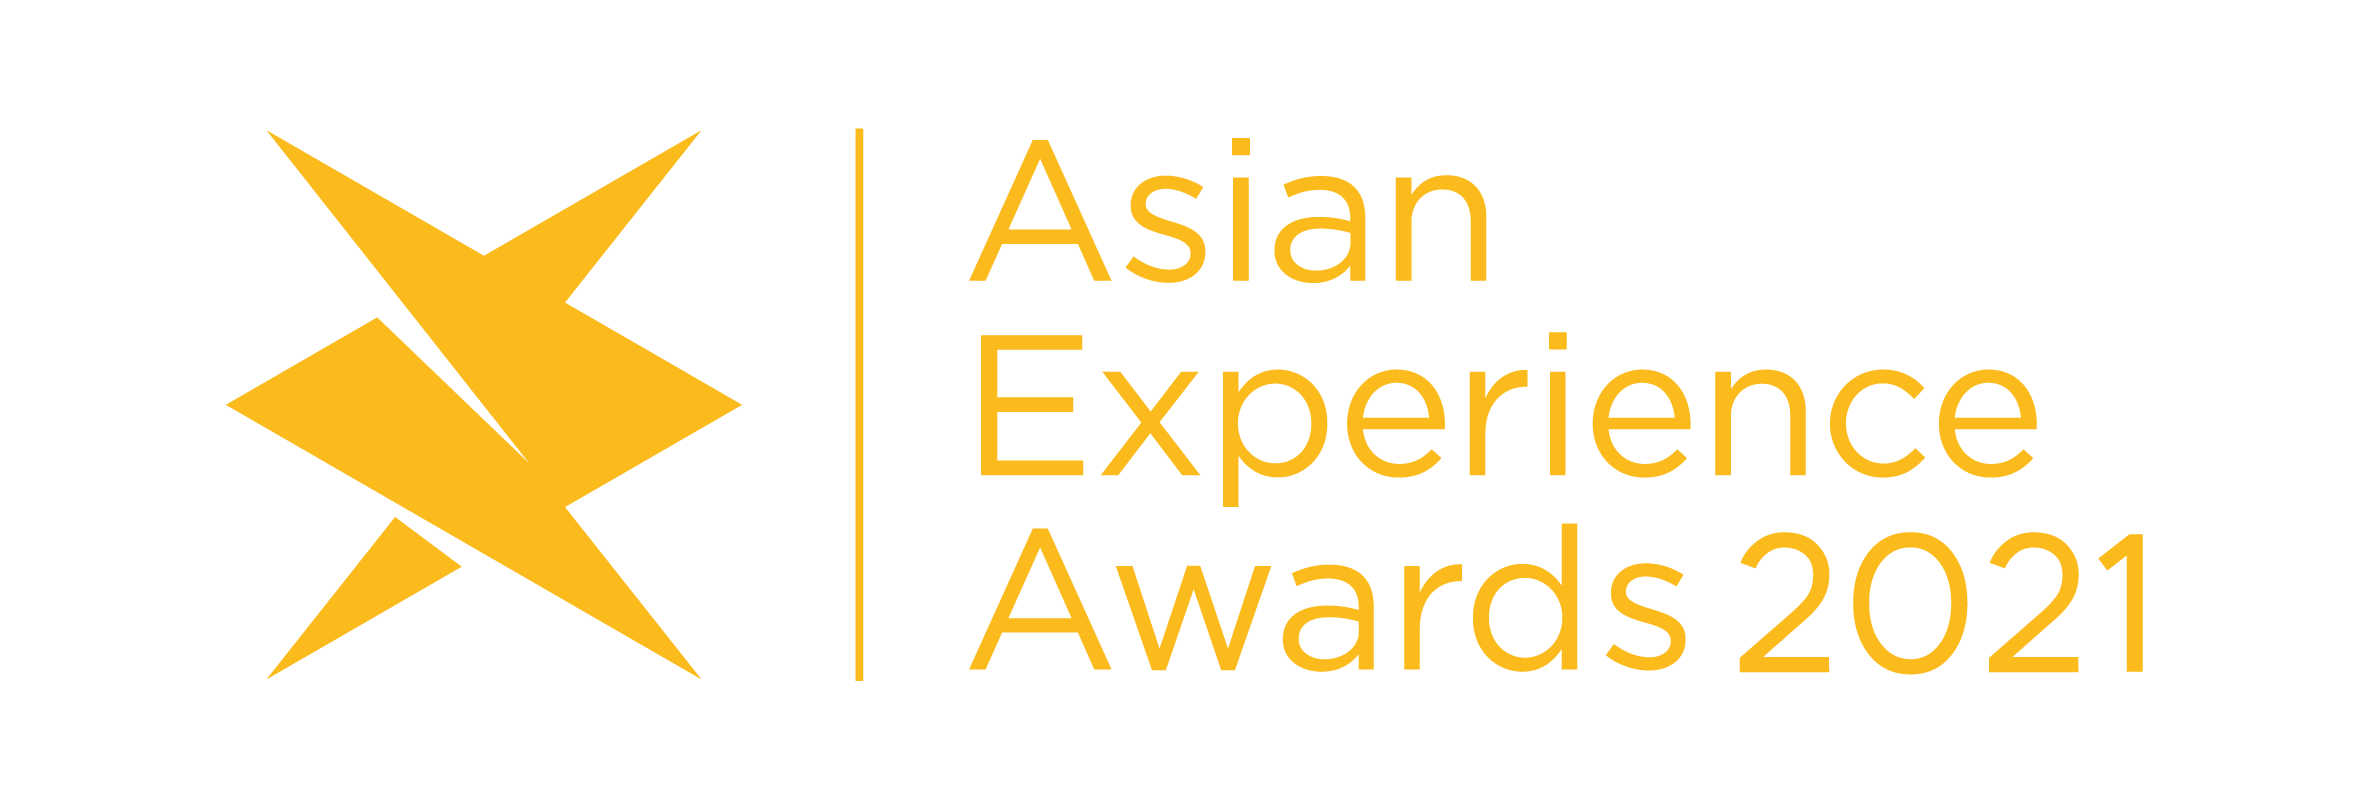 Asian Experience Awards 2021